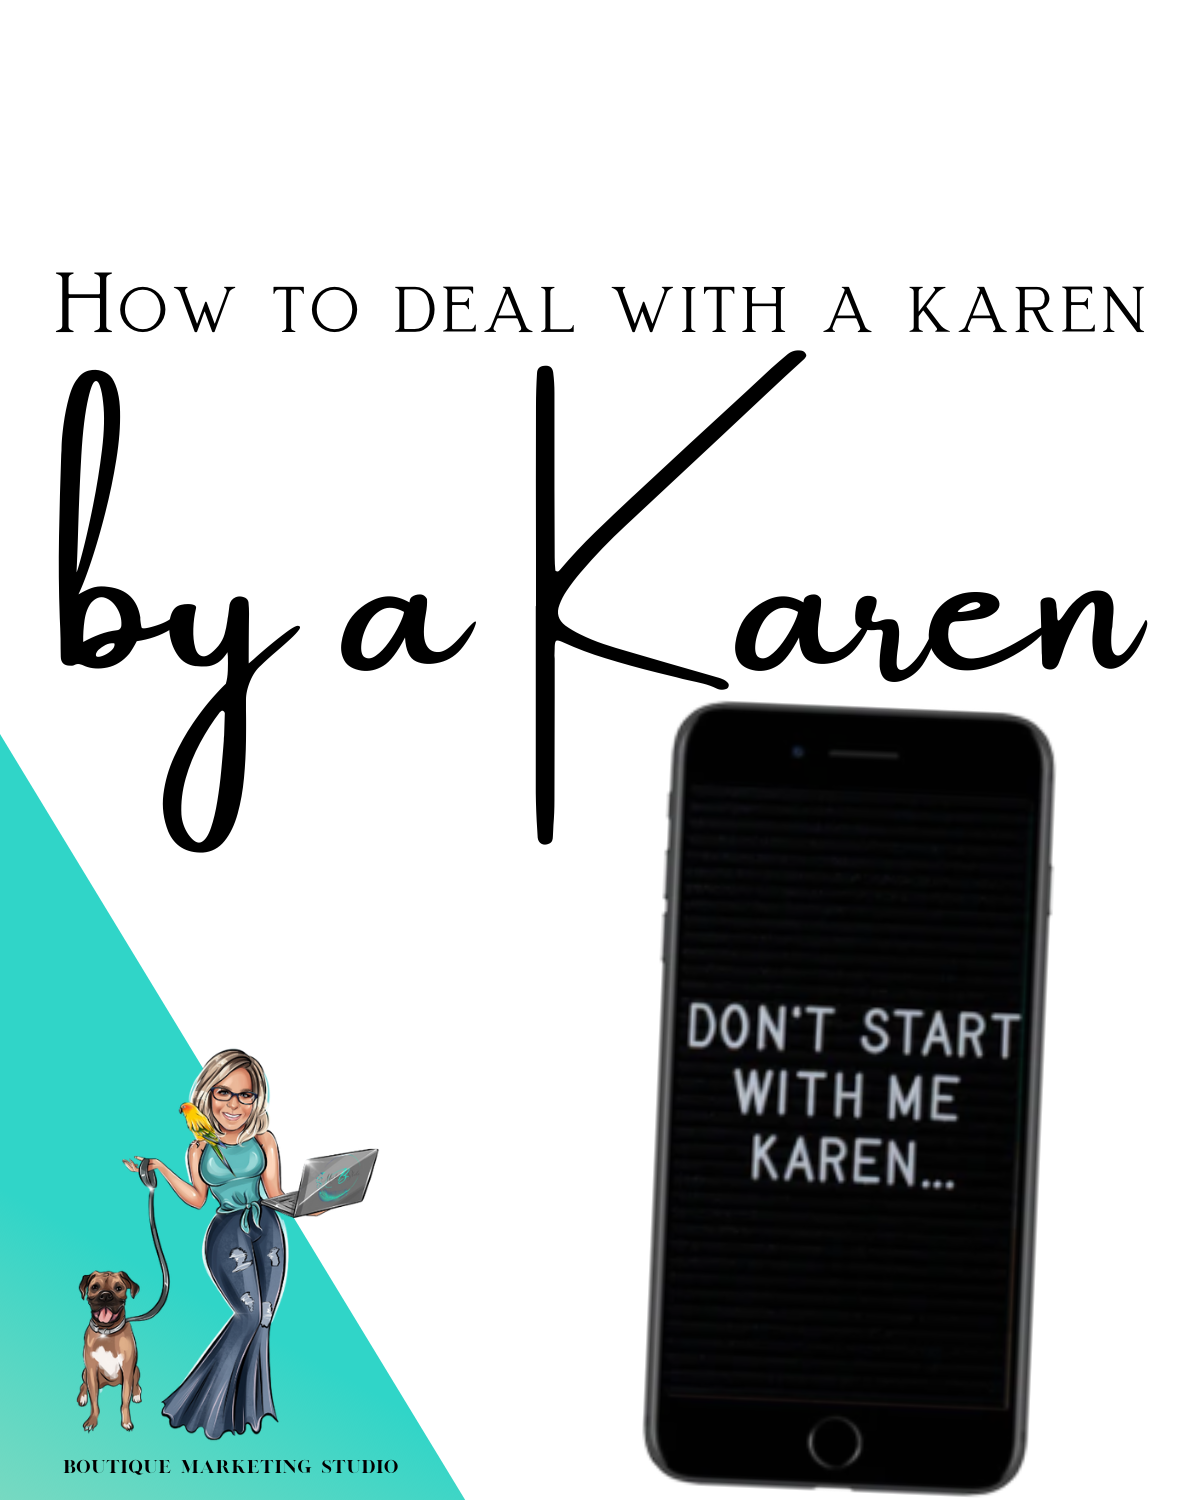 How to deal with a Karen by Karen!